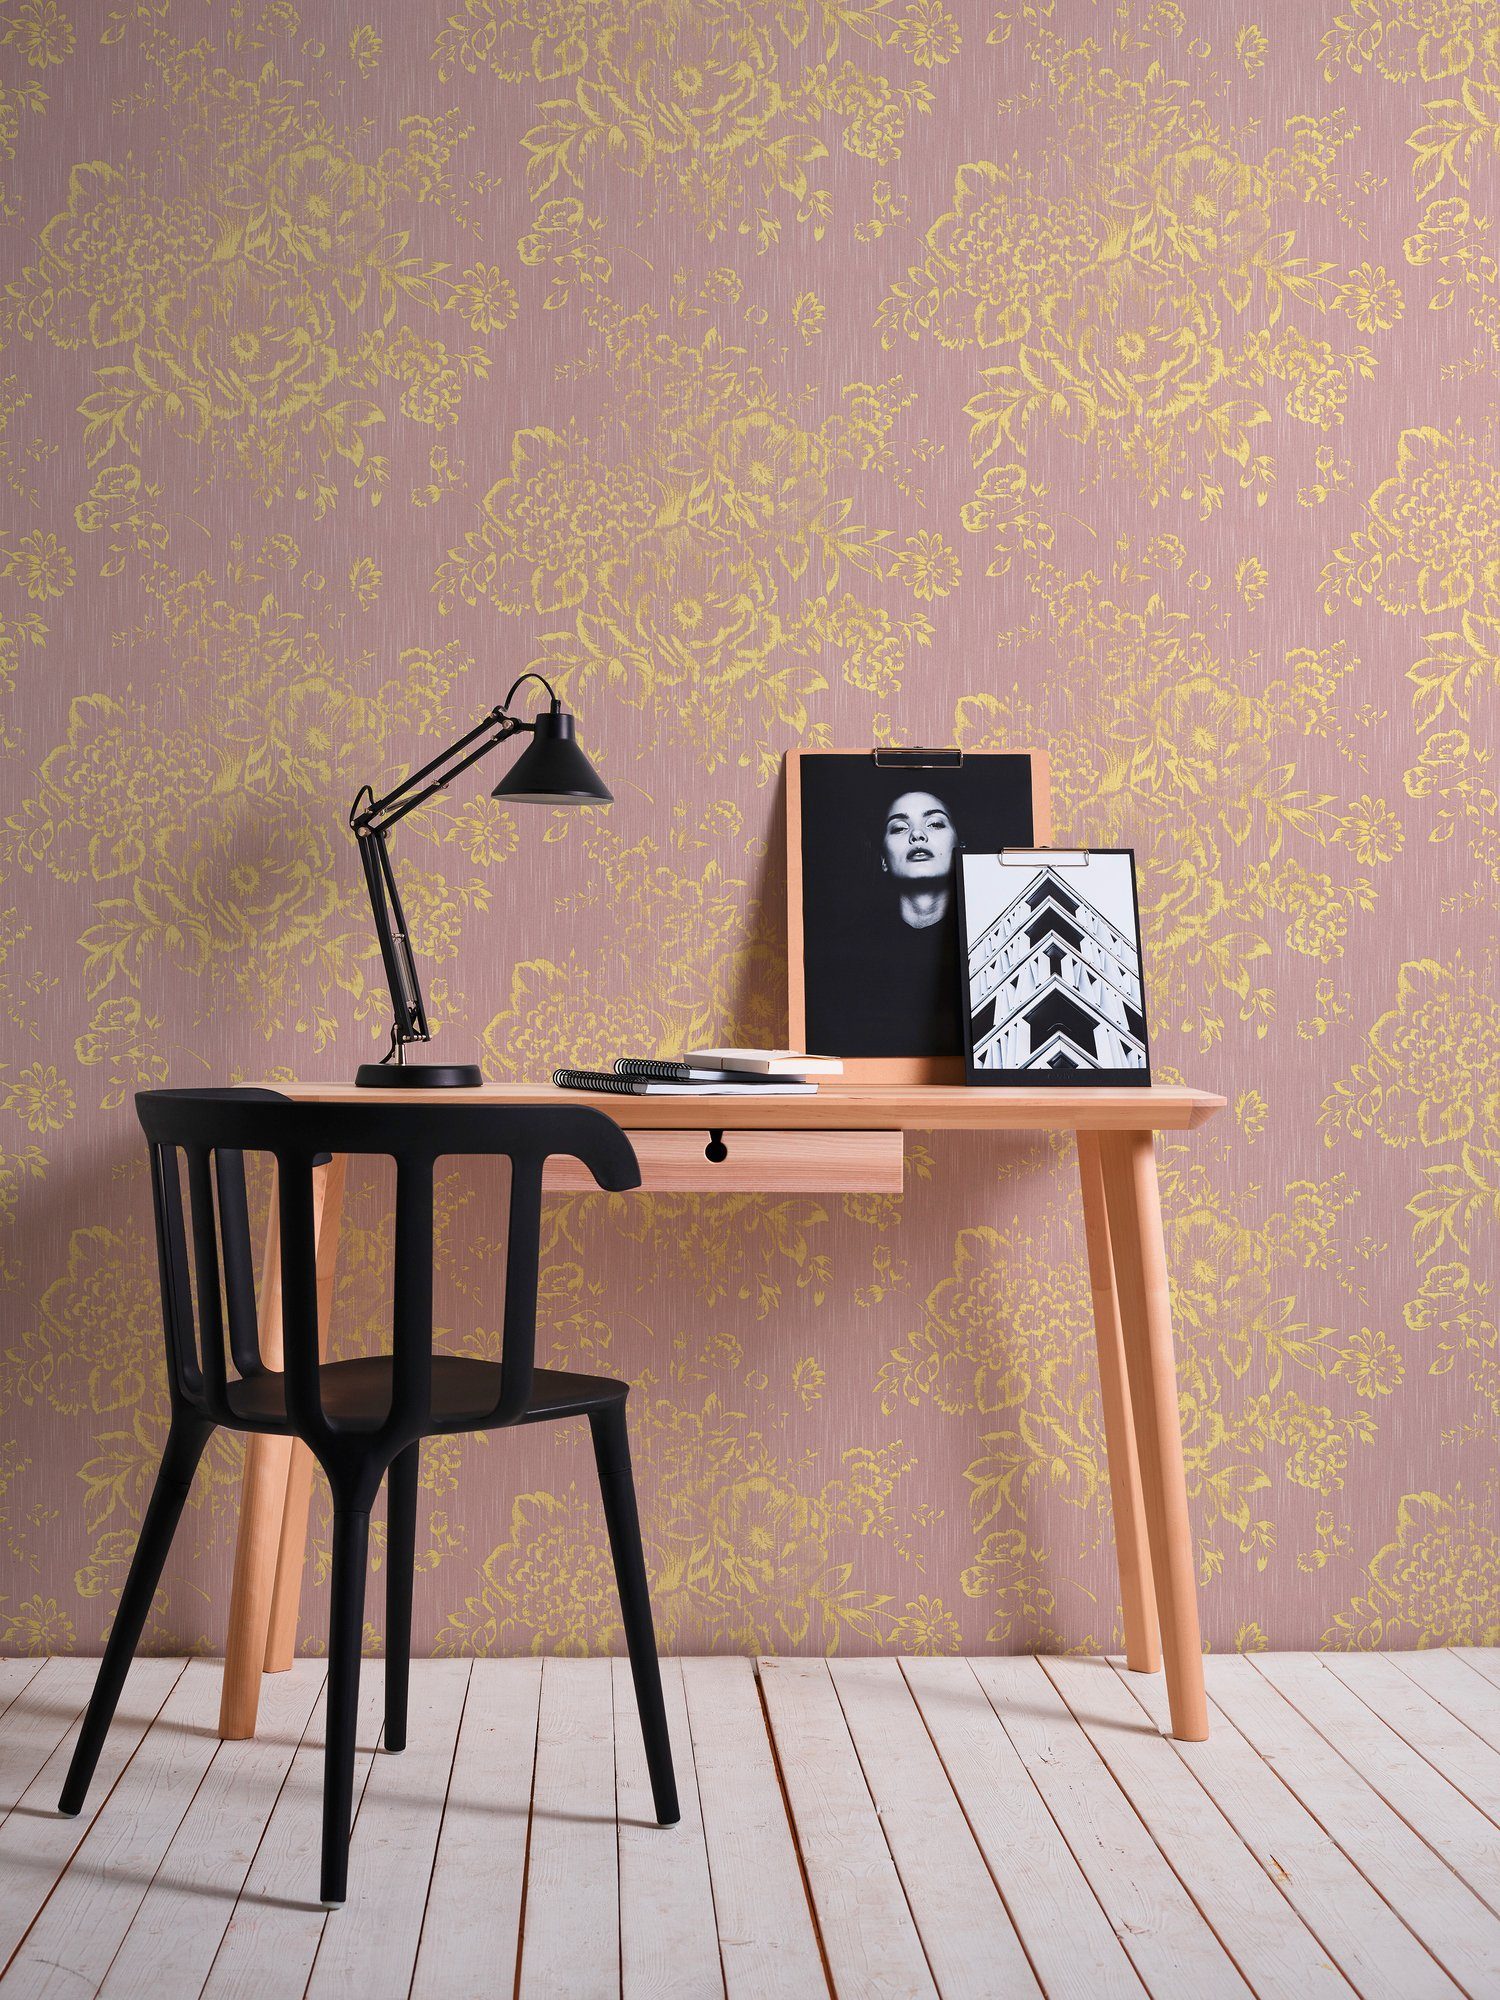 A.S. Création Architects Paper Textiltapete floral, Metallic matt, samtig, Blumen Silk, gold/rosa glänzend, Barocktapete Tapete